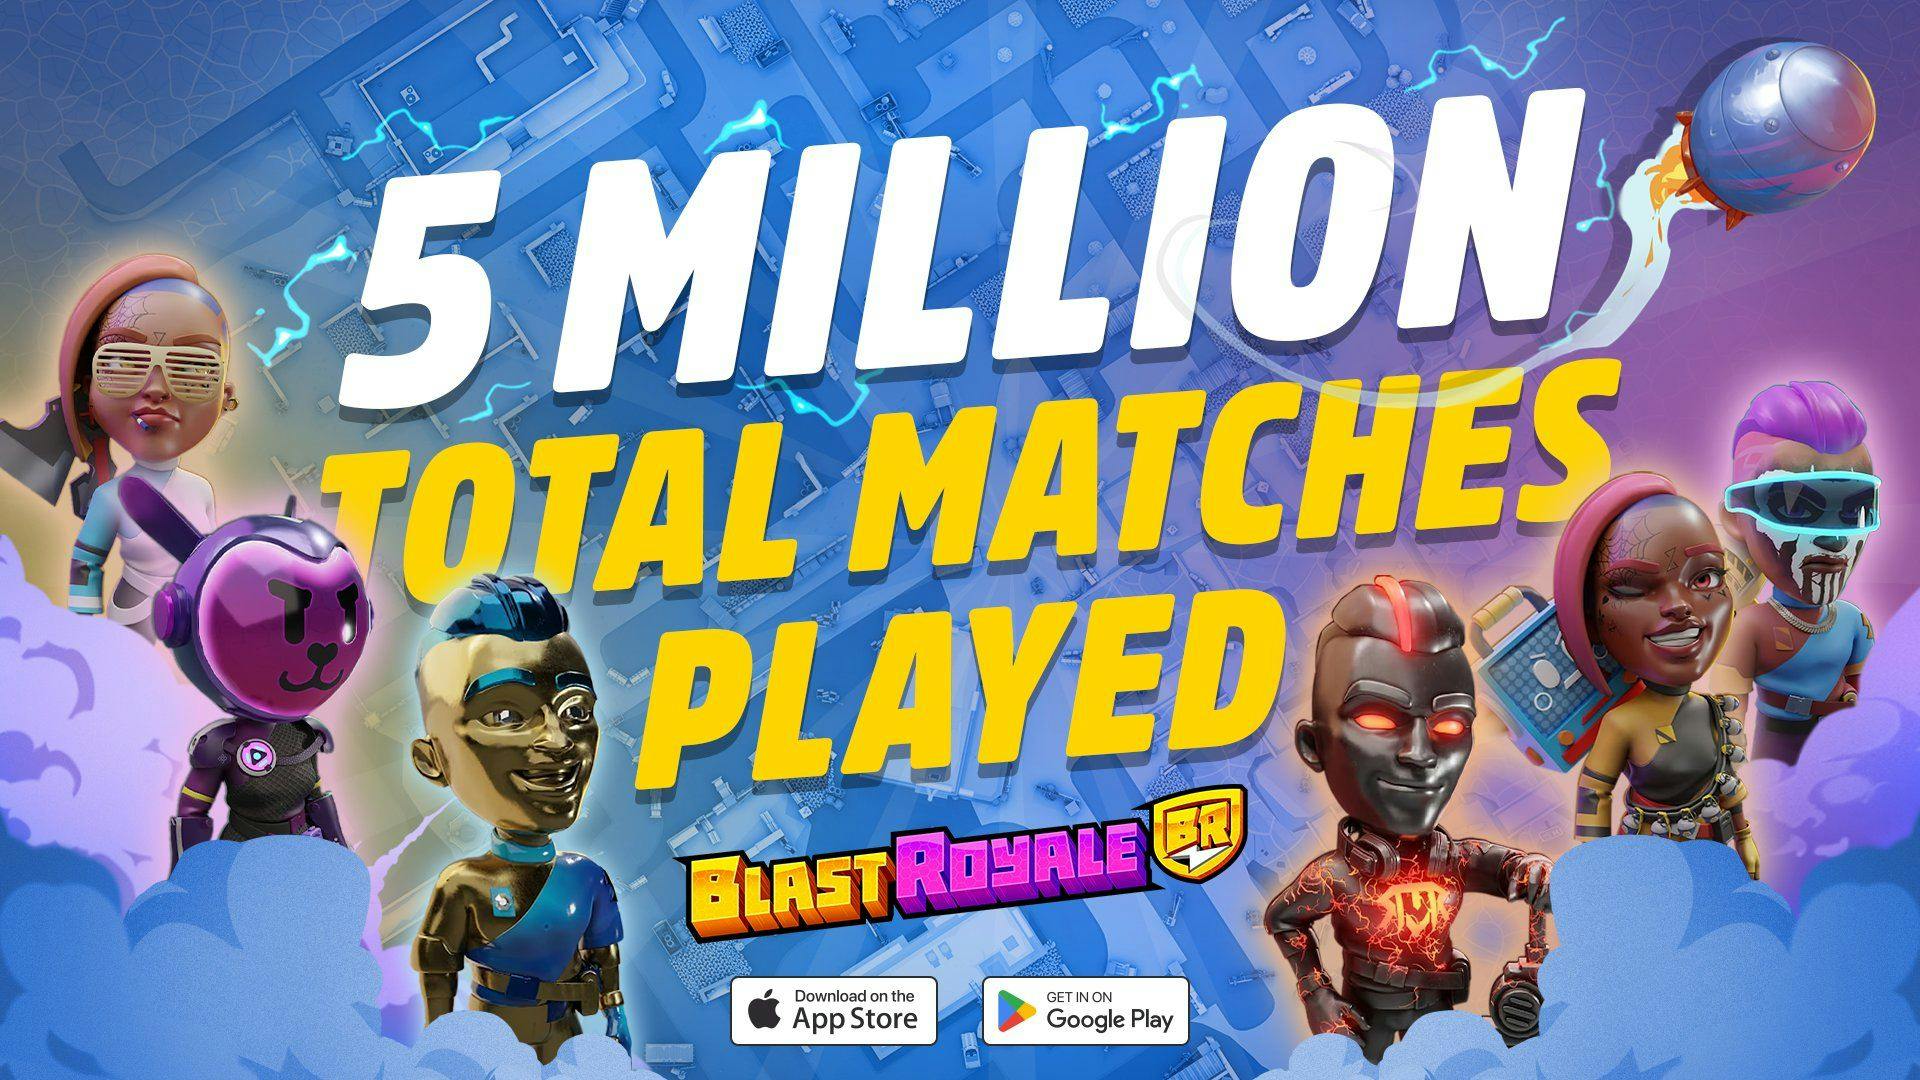 Blast Royale 5 Million Matches Played